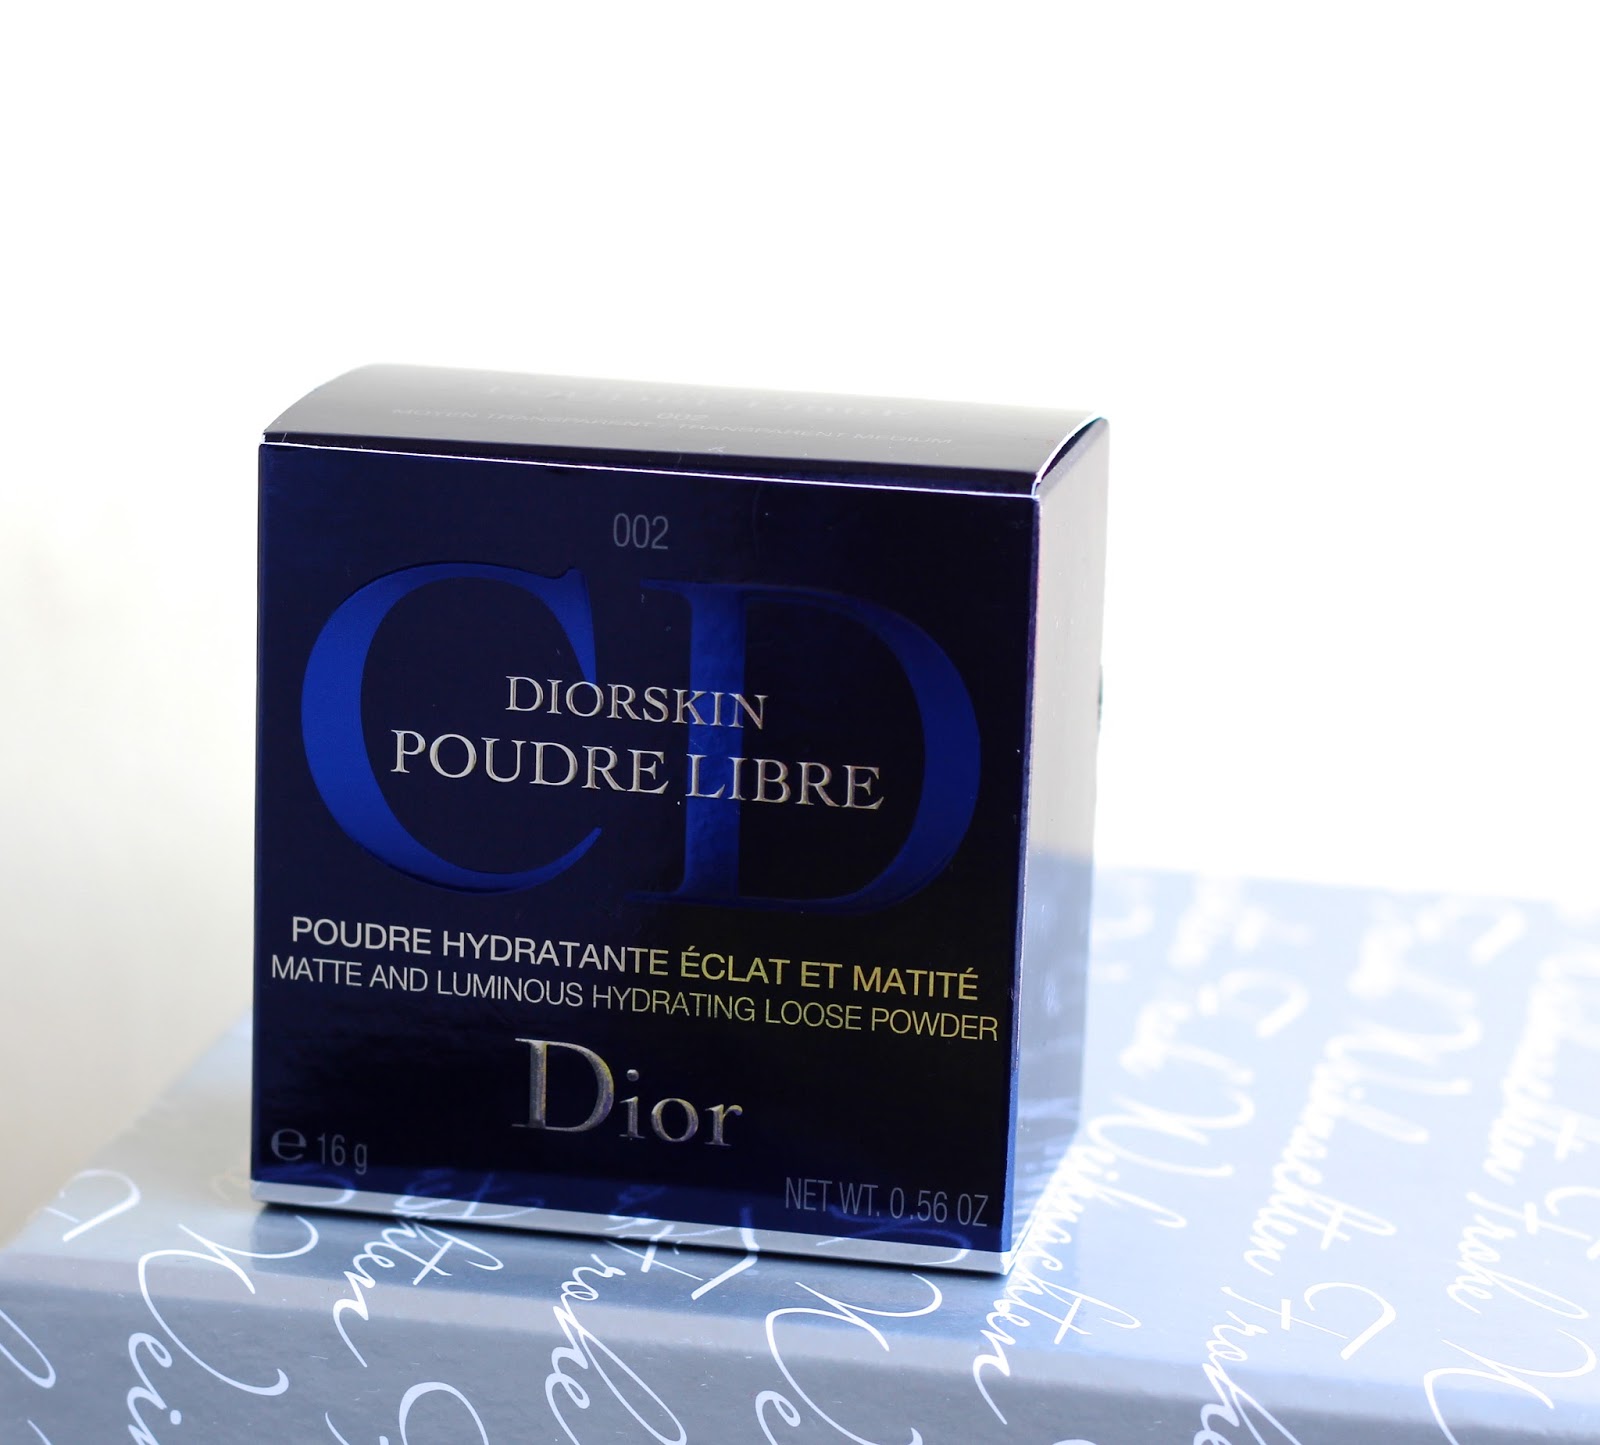 Dior Diorskin Poudre Libre matte and luminous hydrating loose powder 002 Transparent Medium